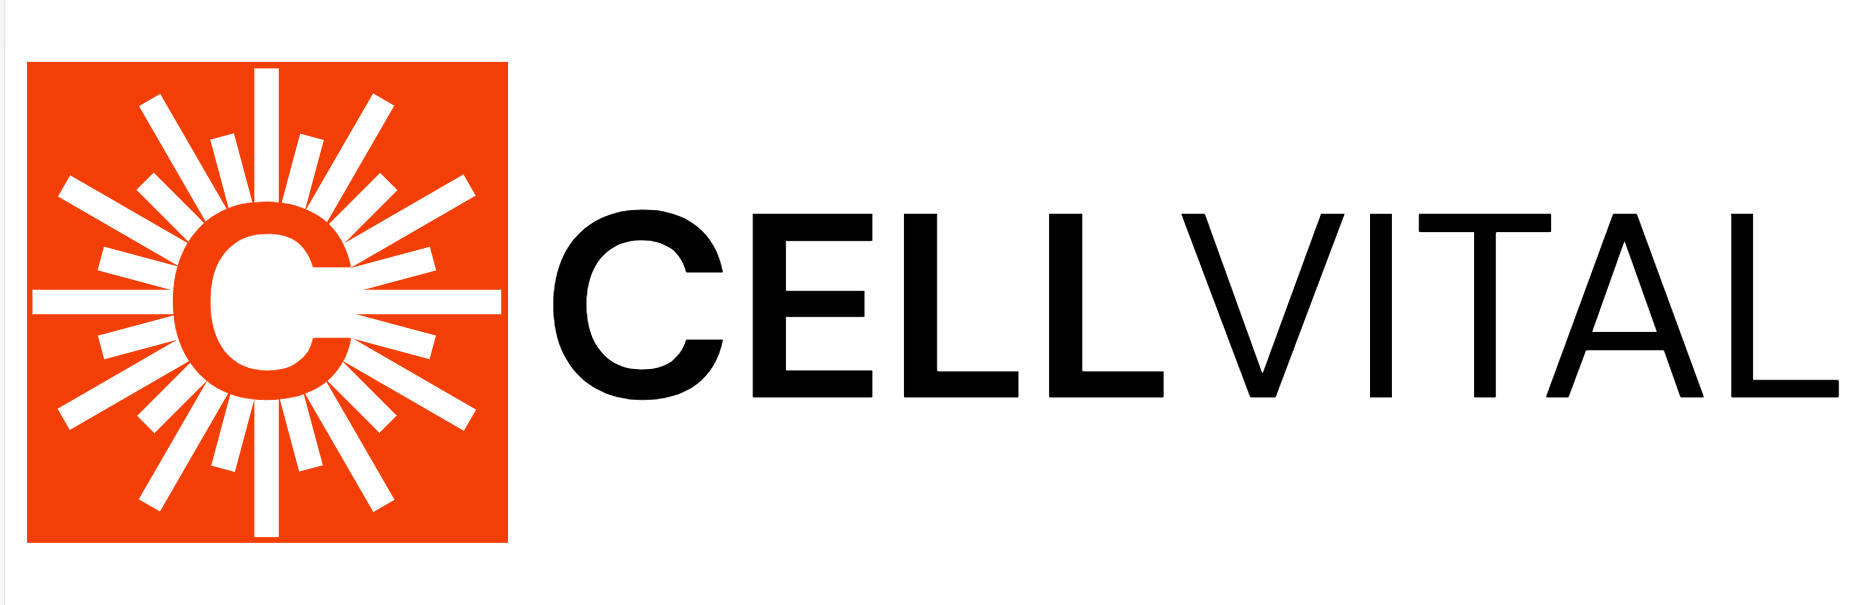 cellvital